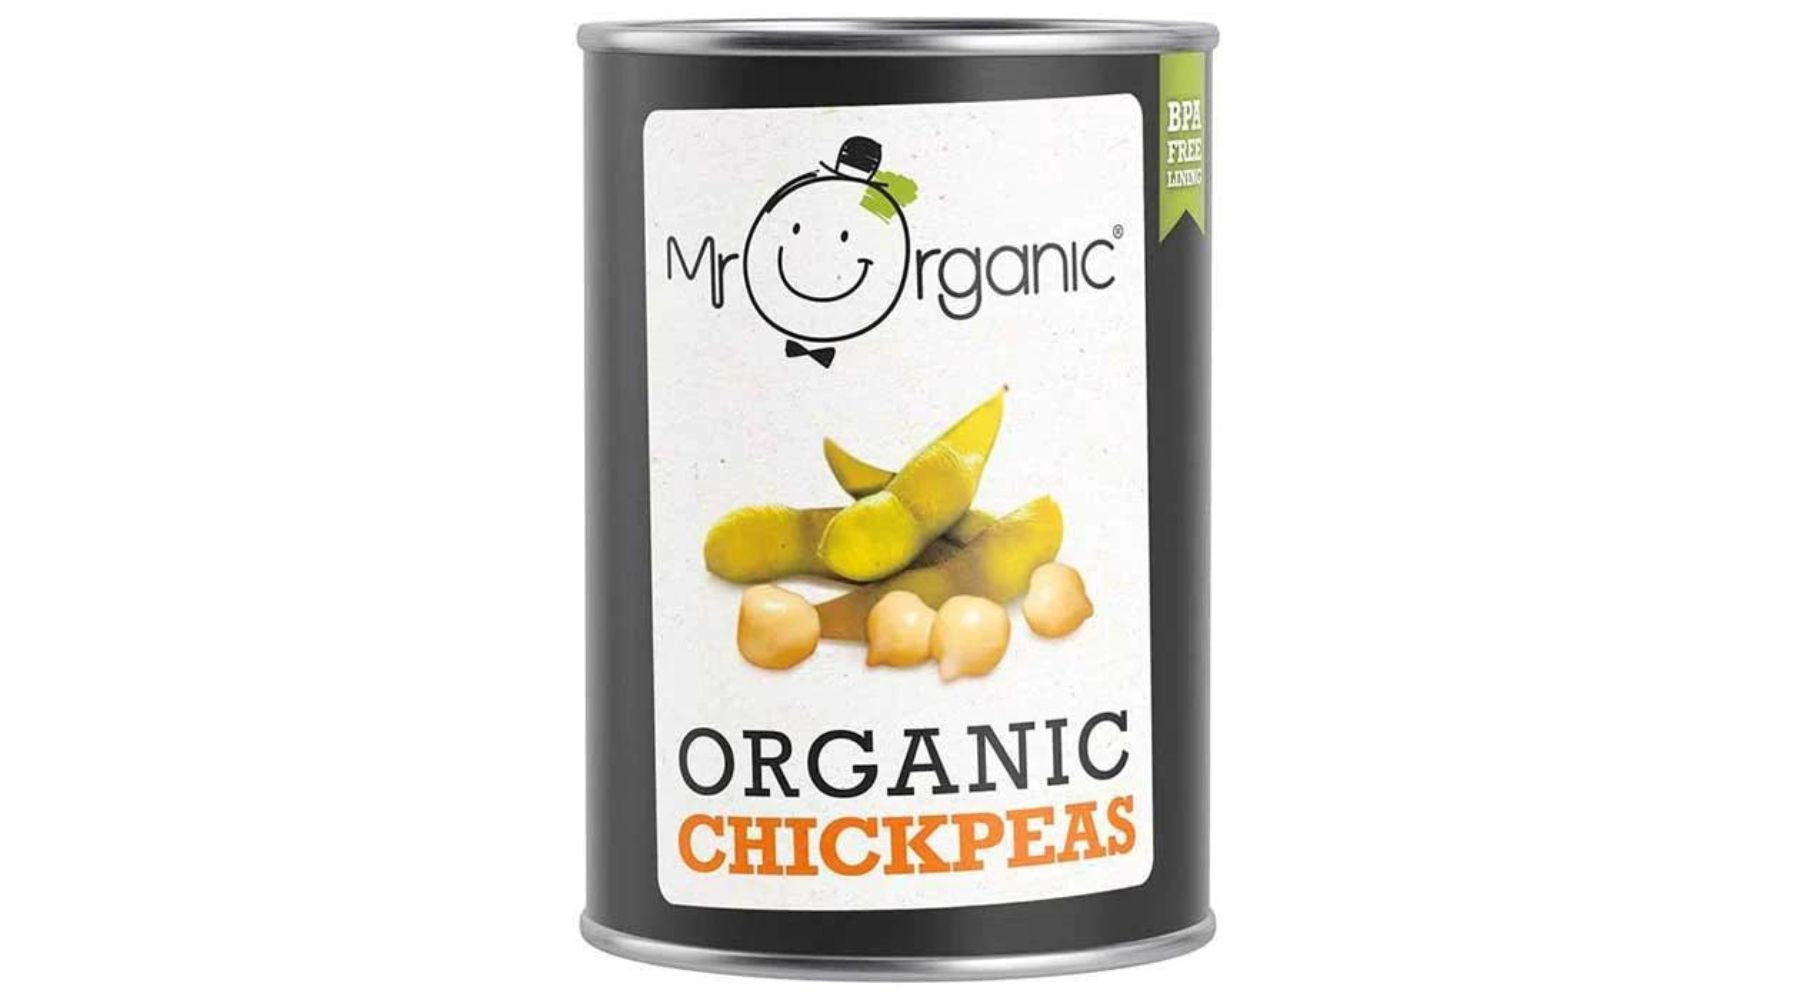 Mr Organic - Organic Chickpeas, 400g